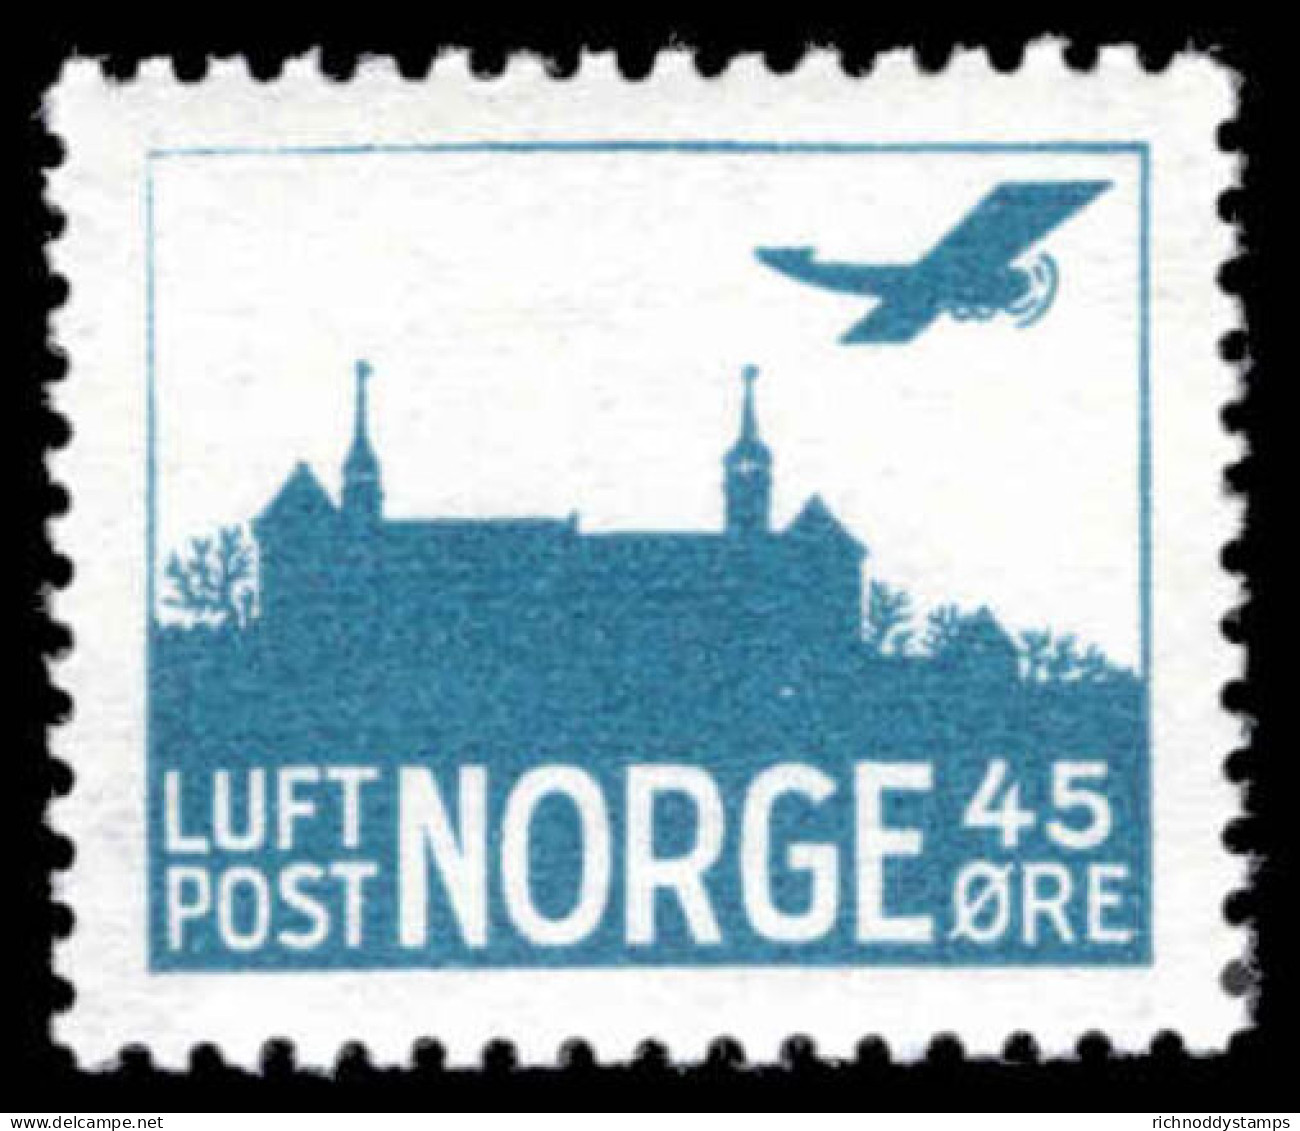 Norway 1927 Air First Printing Unmounted Mint. - Ungebraucht